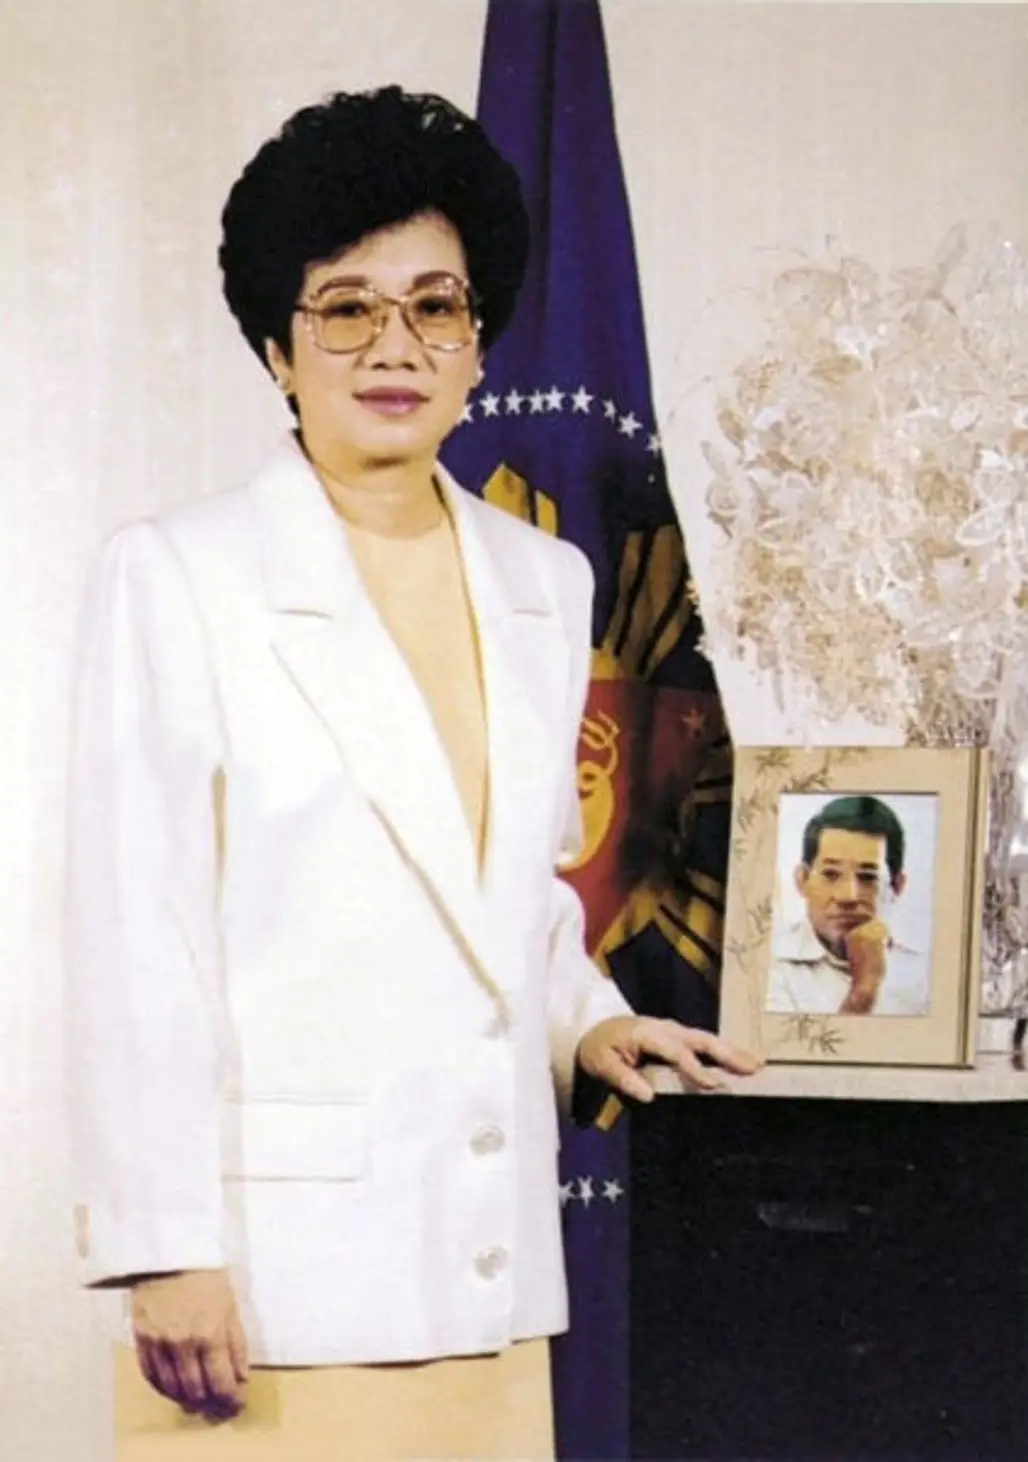 The Philippines – Corazon C. Aquino